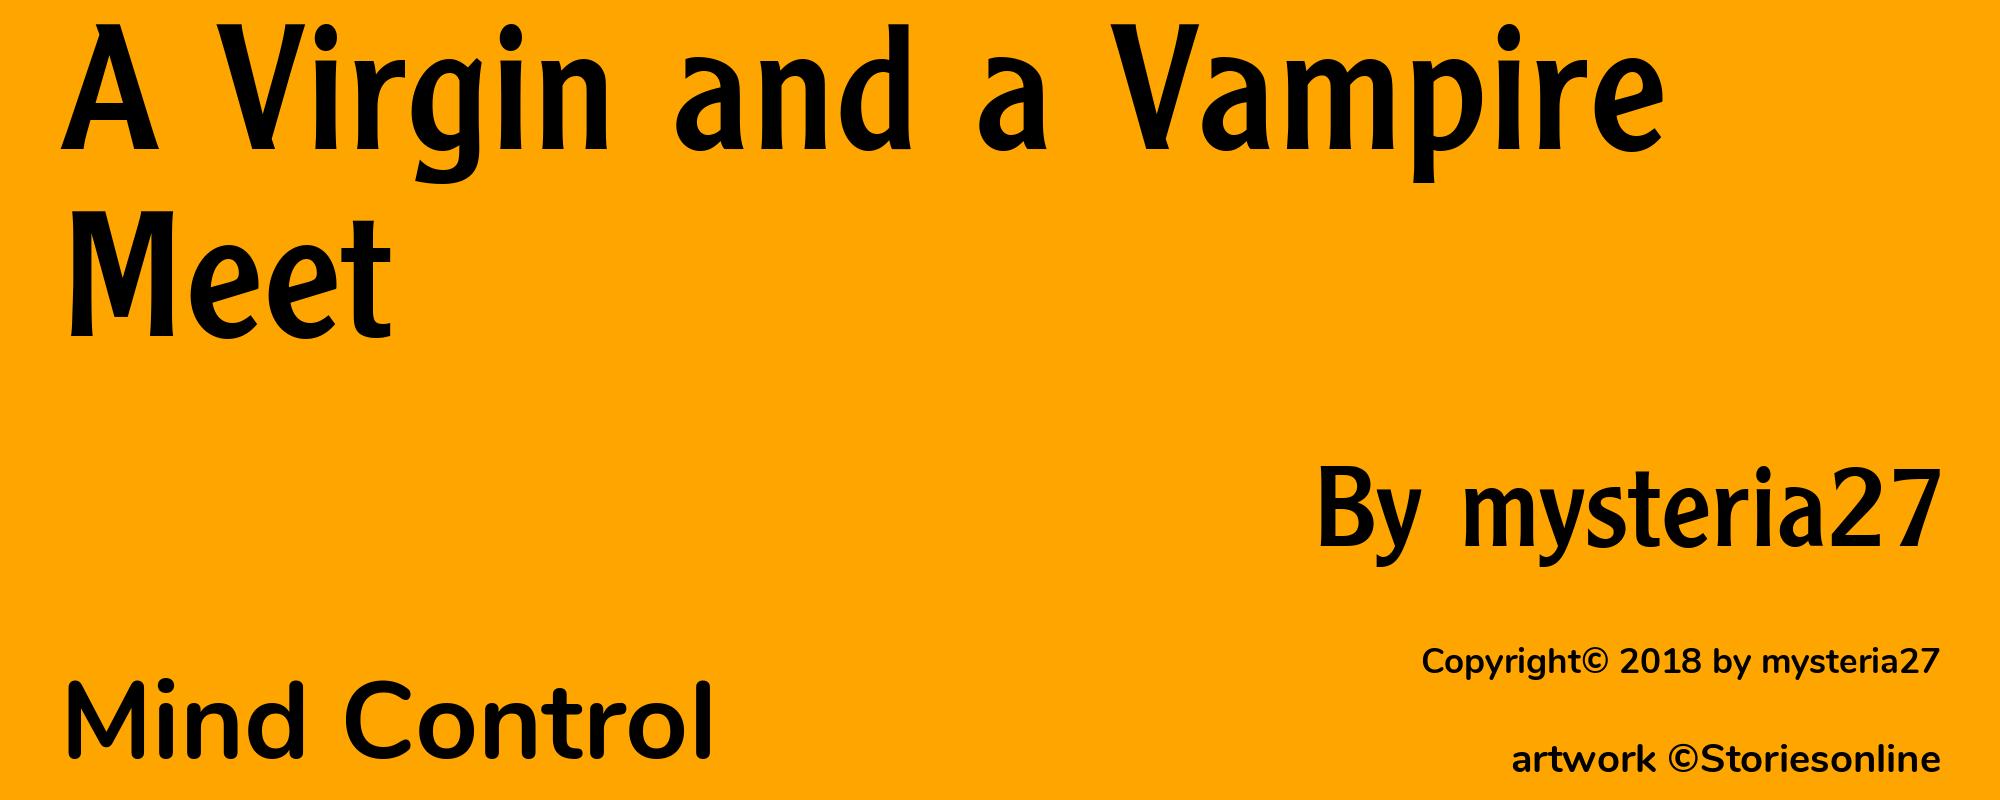 A Virgin and a Vampire Meet - Cover